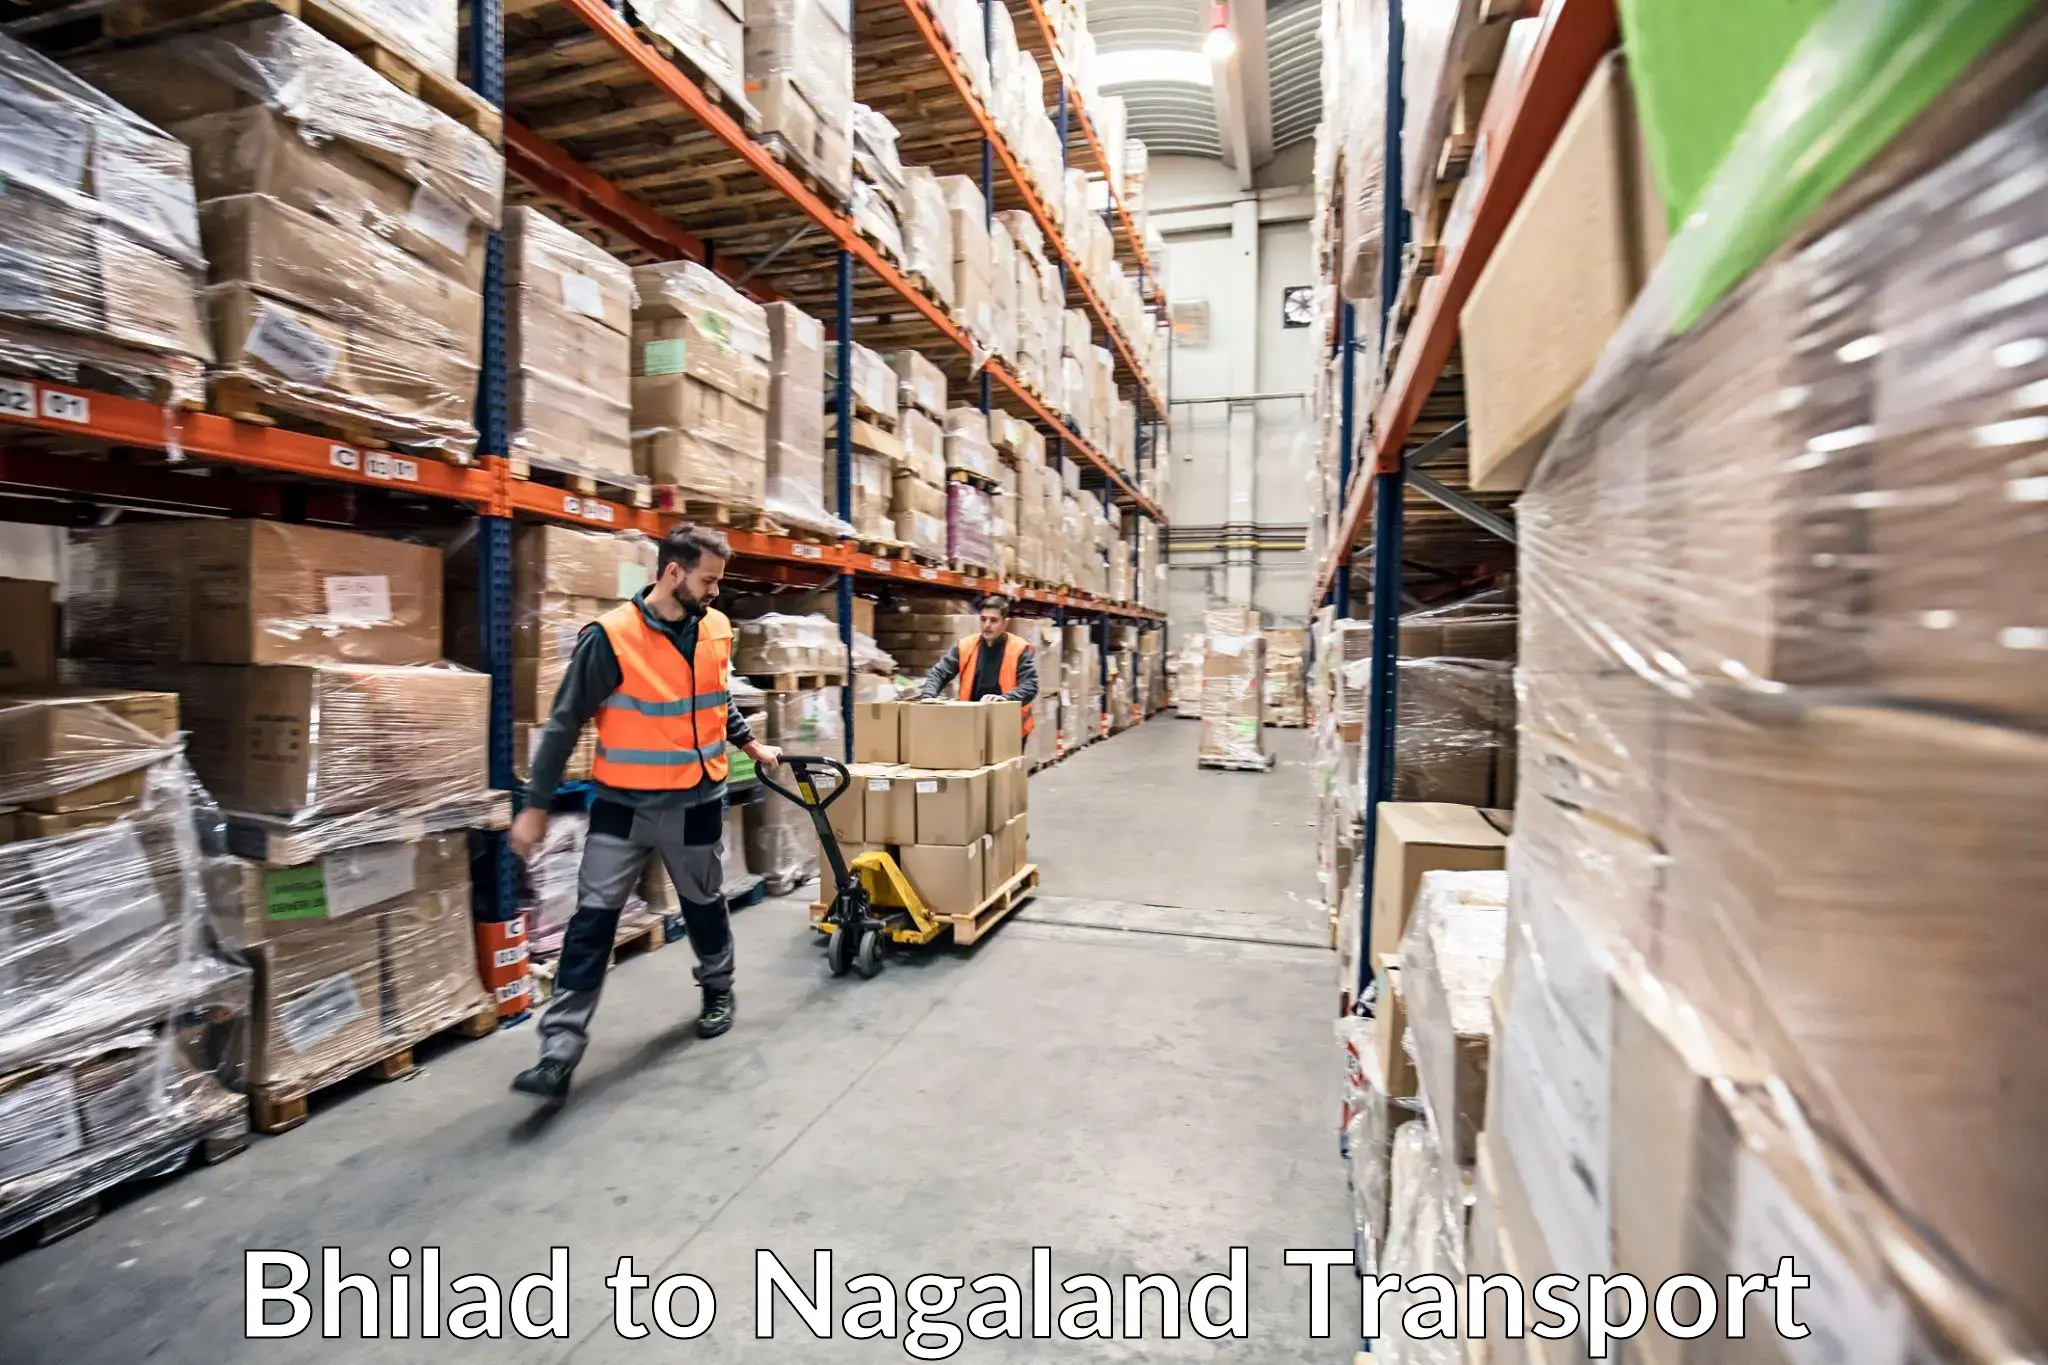 Shipping partner Bhilad to Nagaland